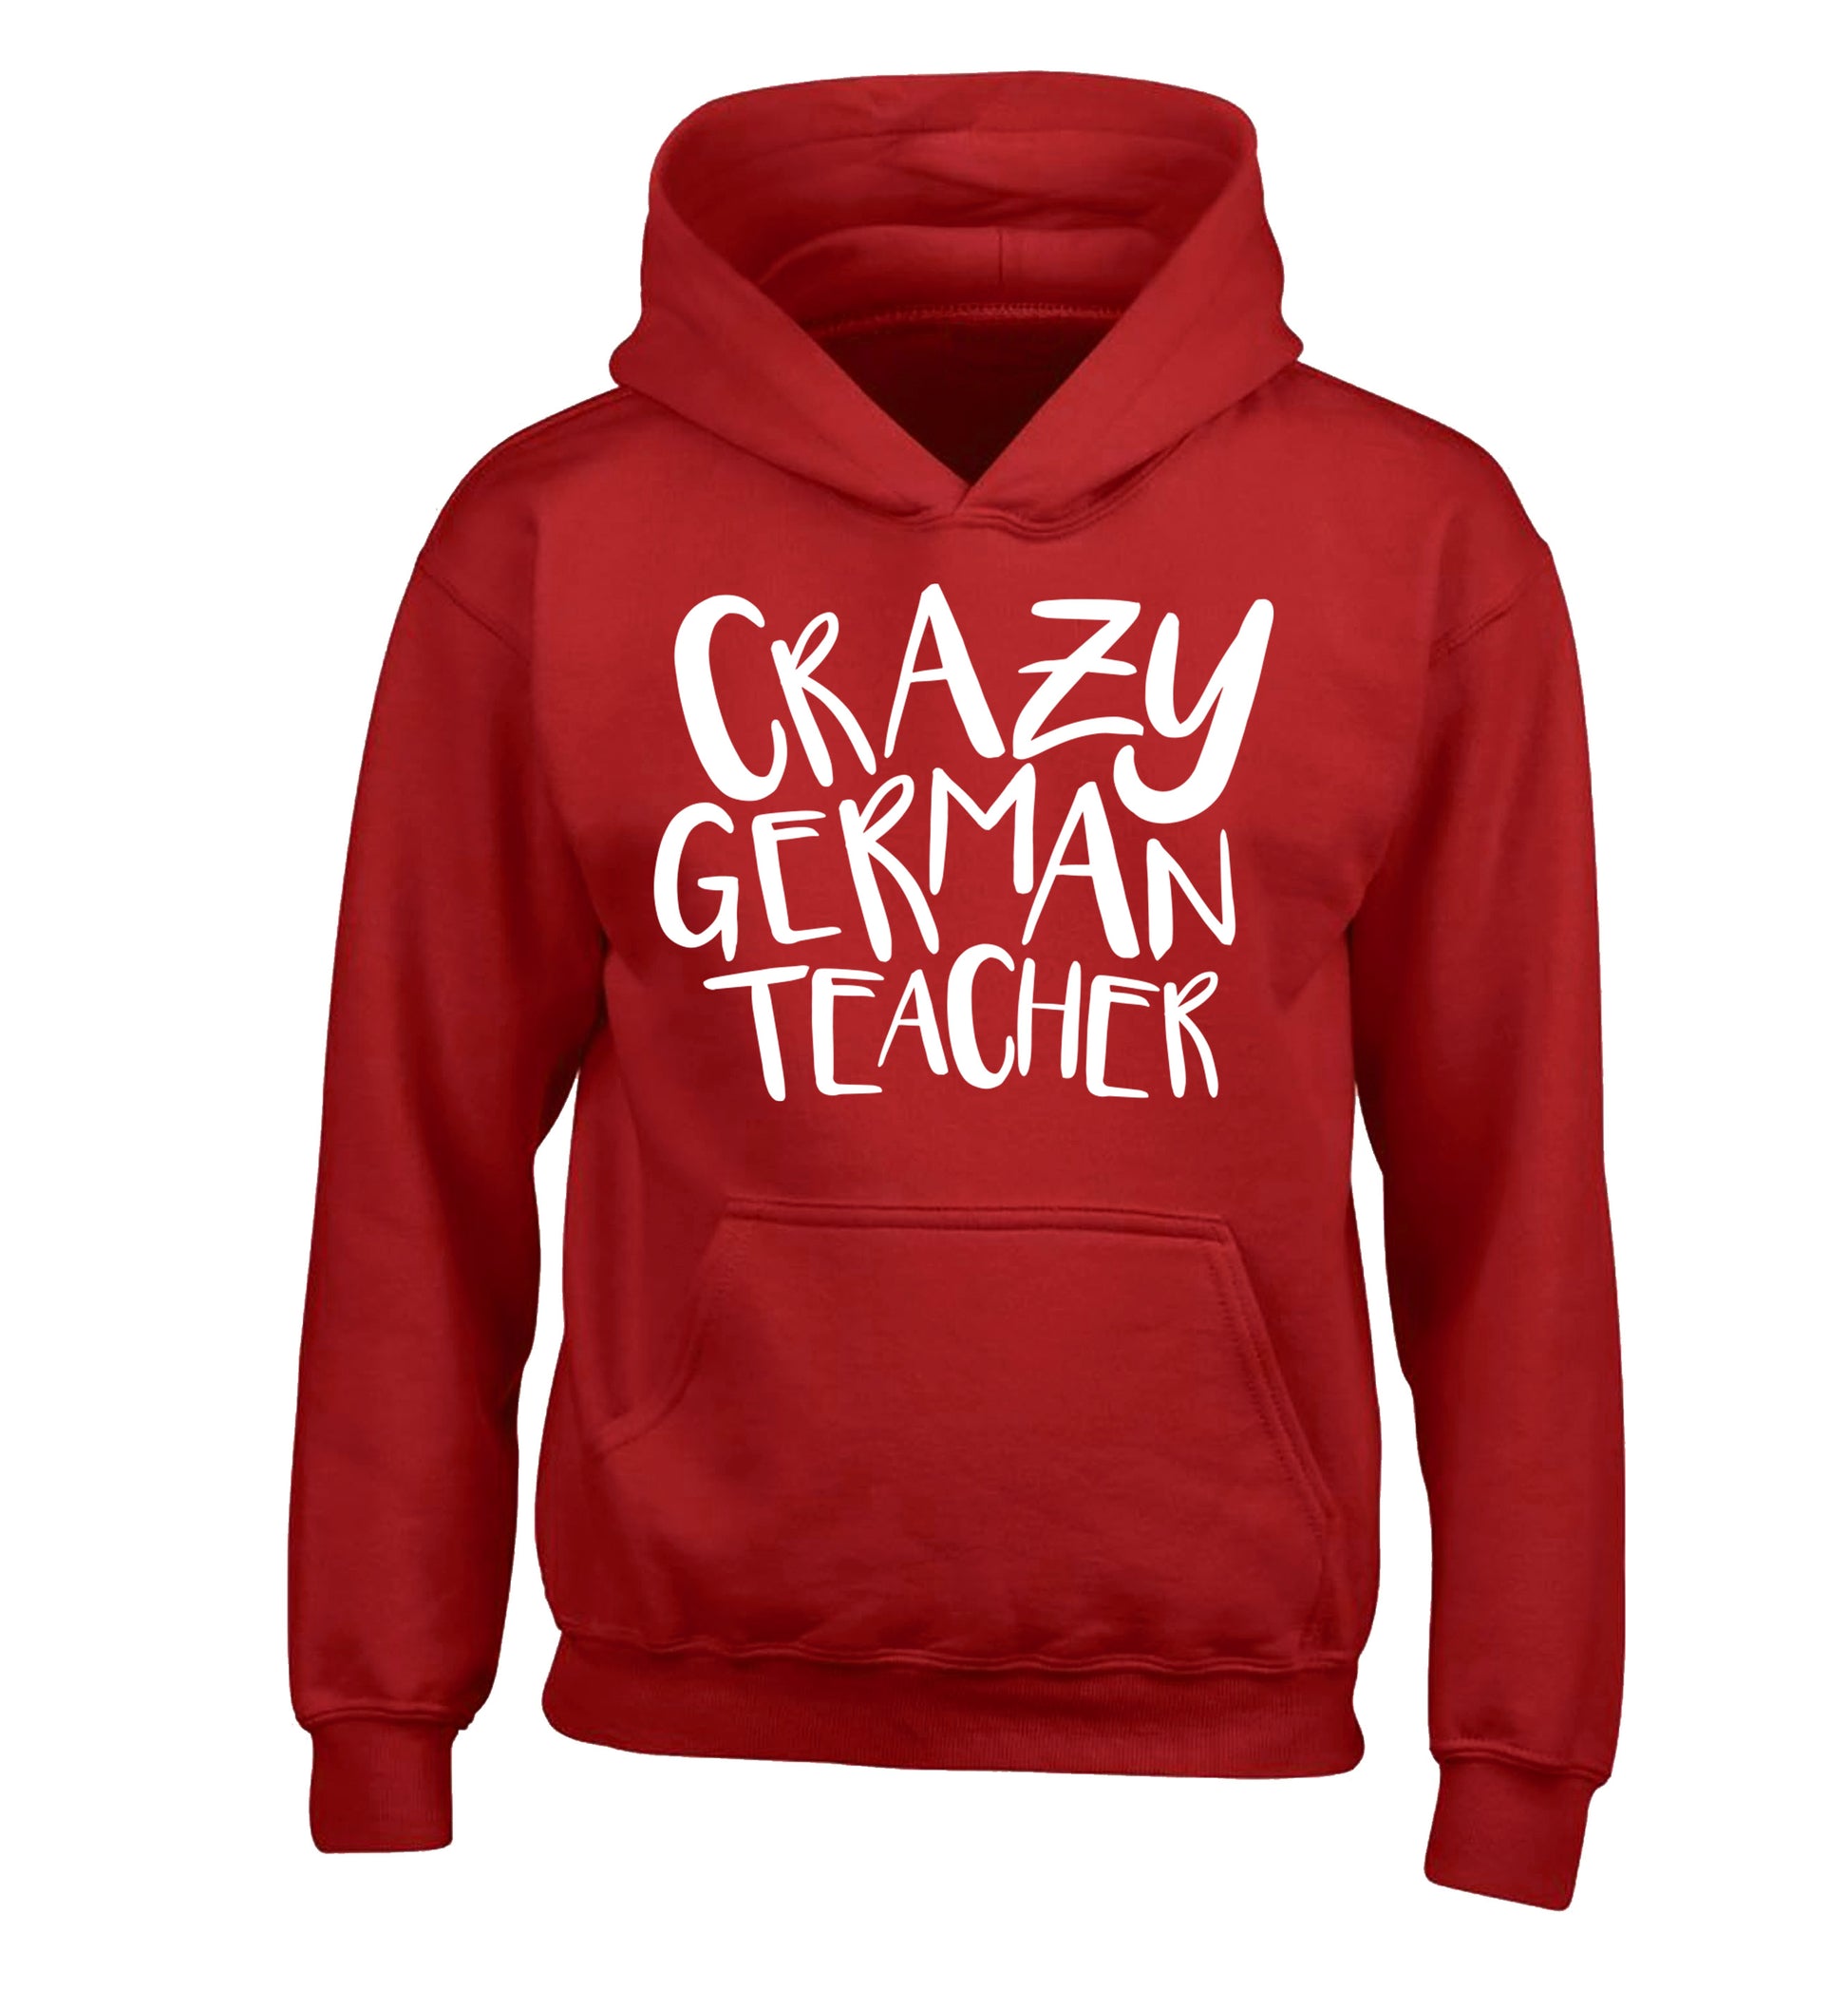 Crazy german teacher children's red hoodie 12-13 Years